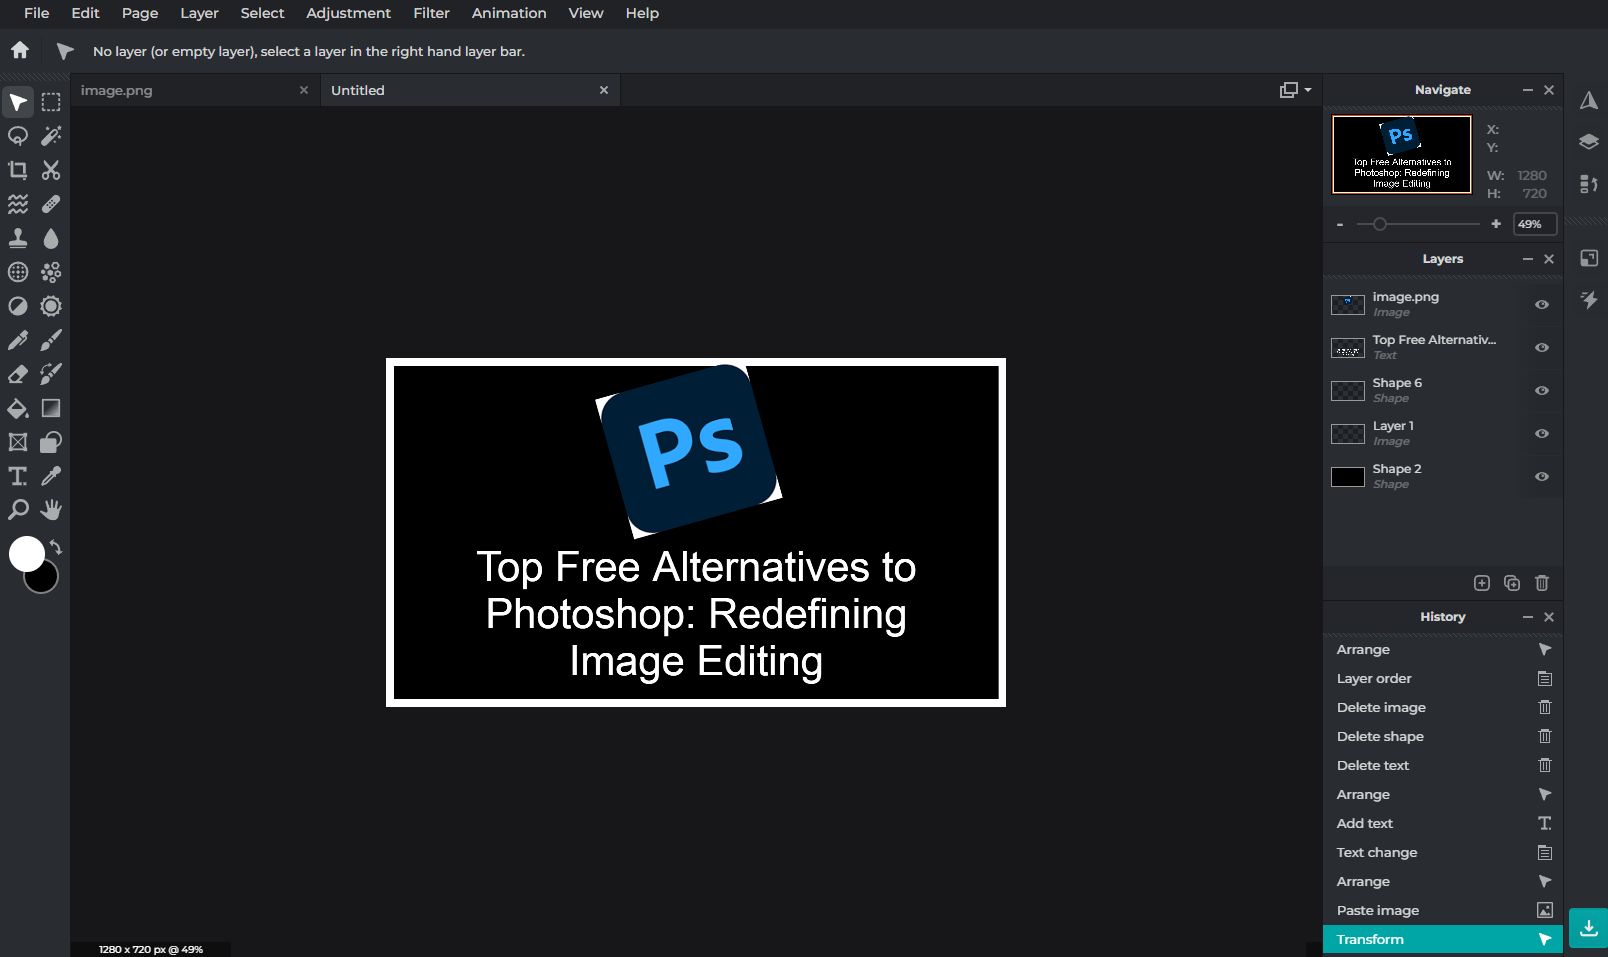 Top Free Alternatives to Photoshop